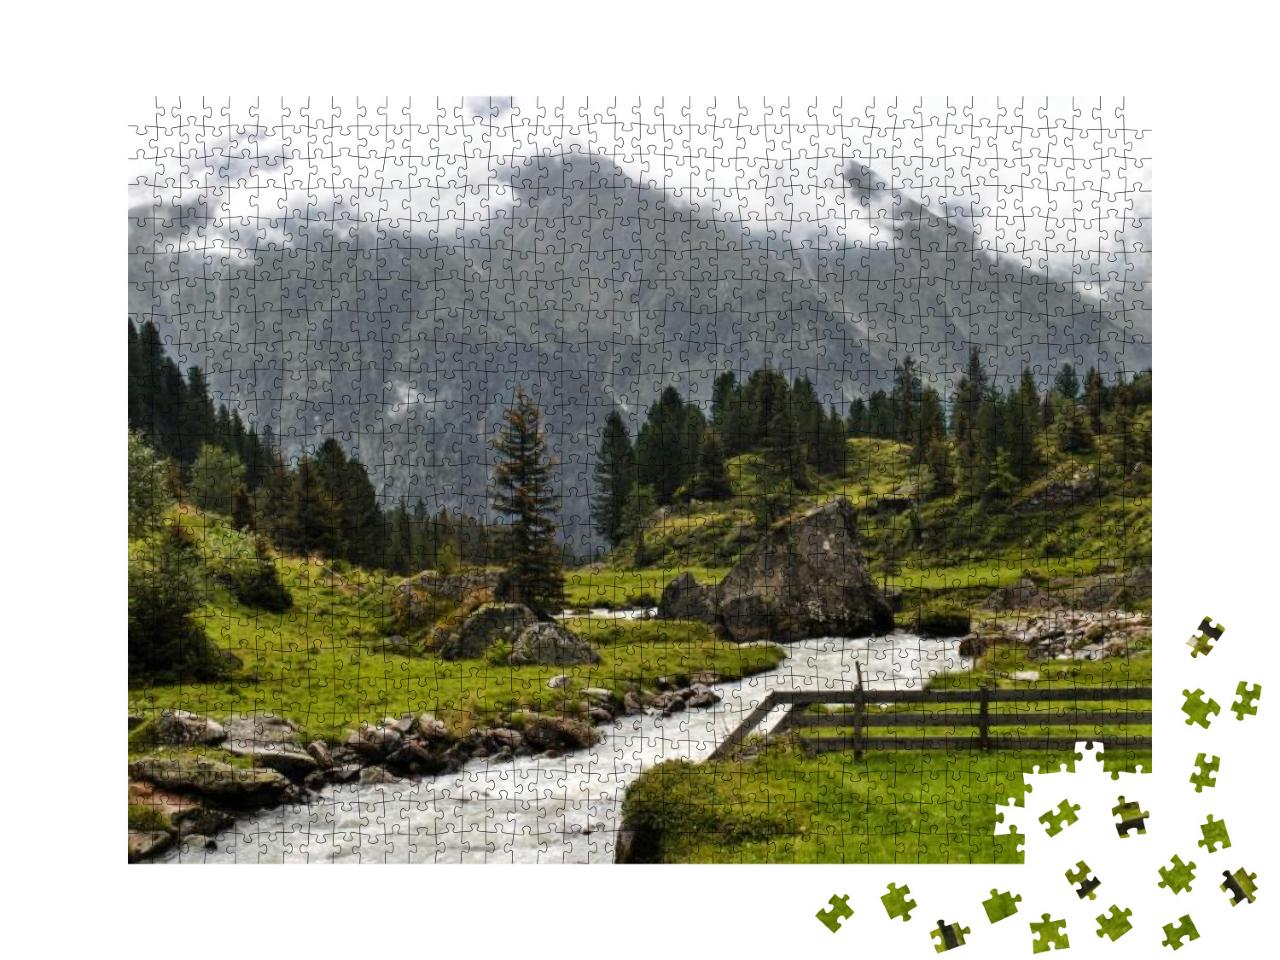 Photos of Stubaital Austria, Mieders, Neustift, Milders... Jigsaw Puzzle with 1000 pieces